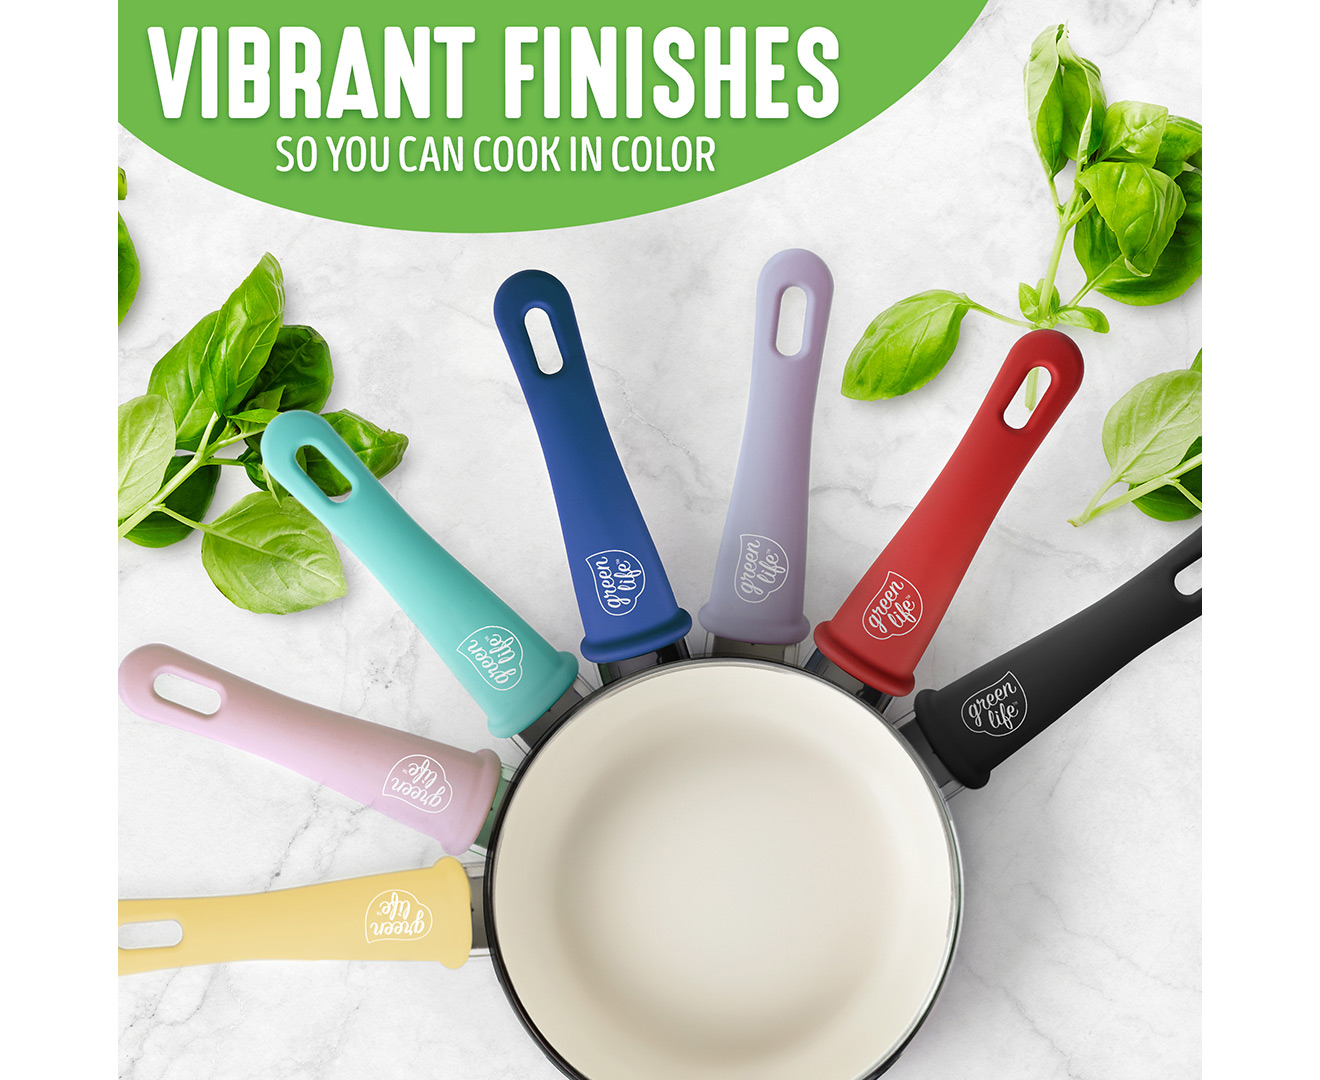 GreenLife Soft Grip Healthy Ceramic Nonstick, Cookware Pots and Pans Set,  12Pcs